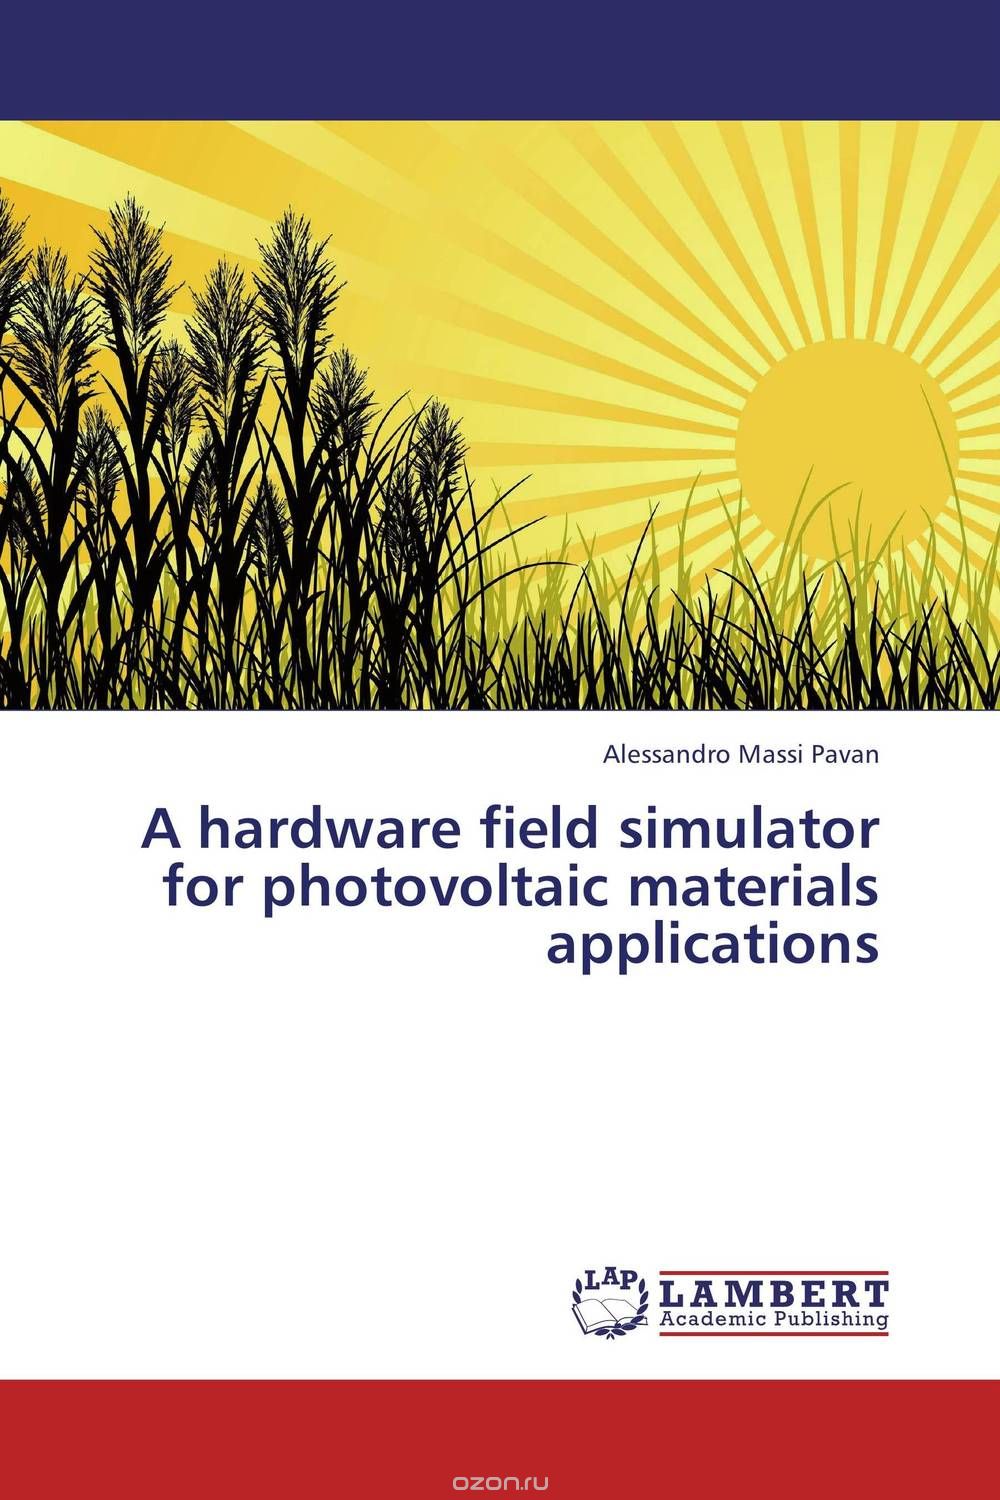 Скачать книгу "A hardware field simulator for photovoltaic materials applications"